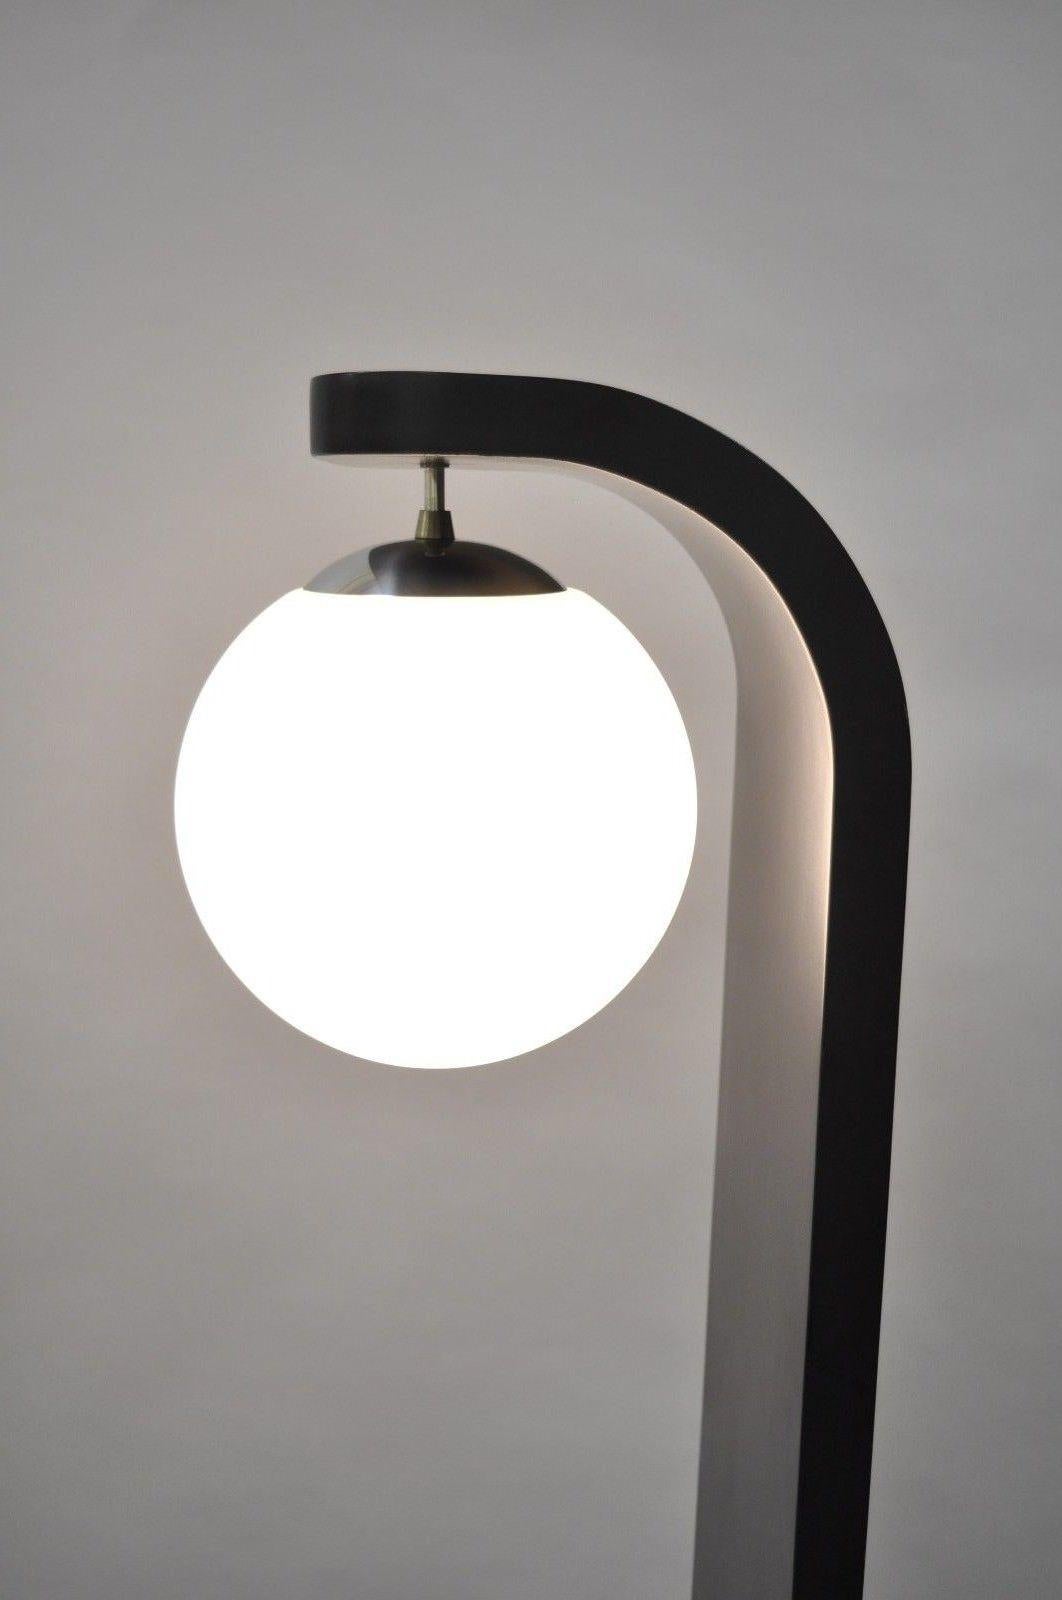 Plastic Mid-Century Modern Sculptural Black Chrome Floor Lamp Attributed to Modeline